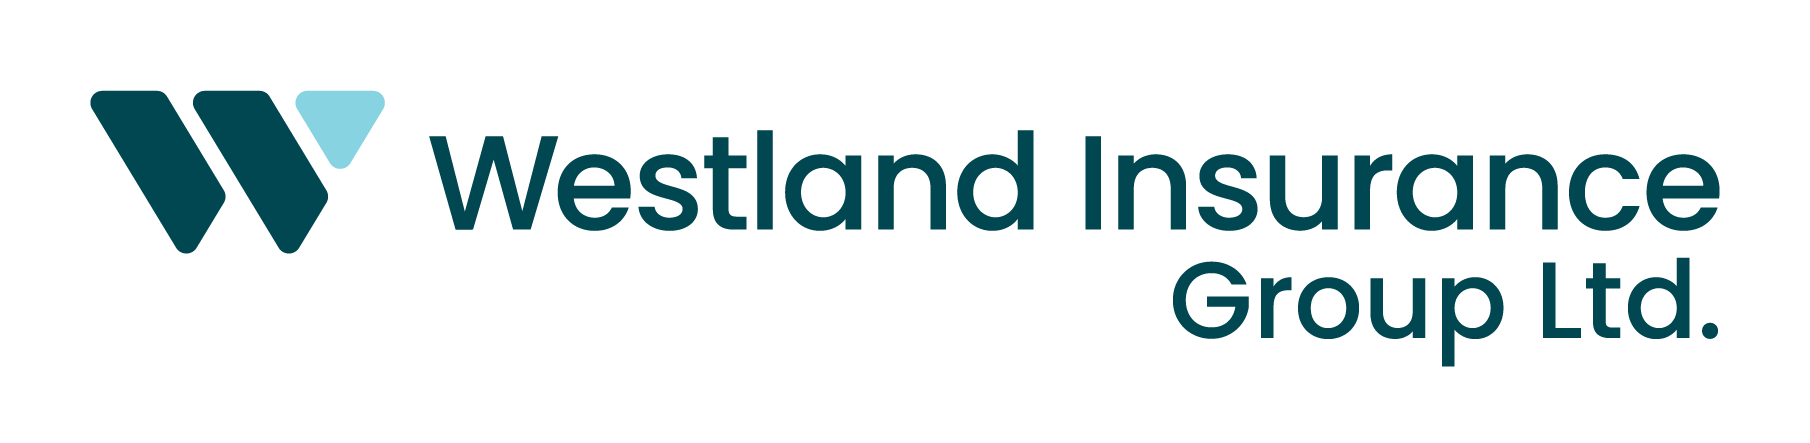 Westland Insurance G